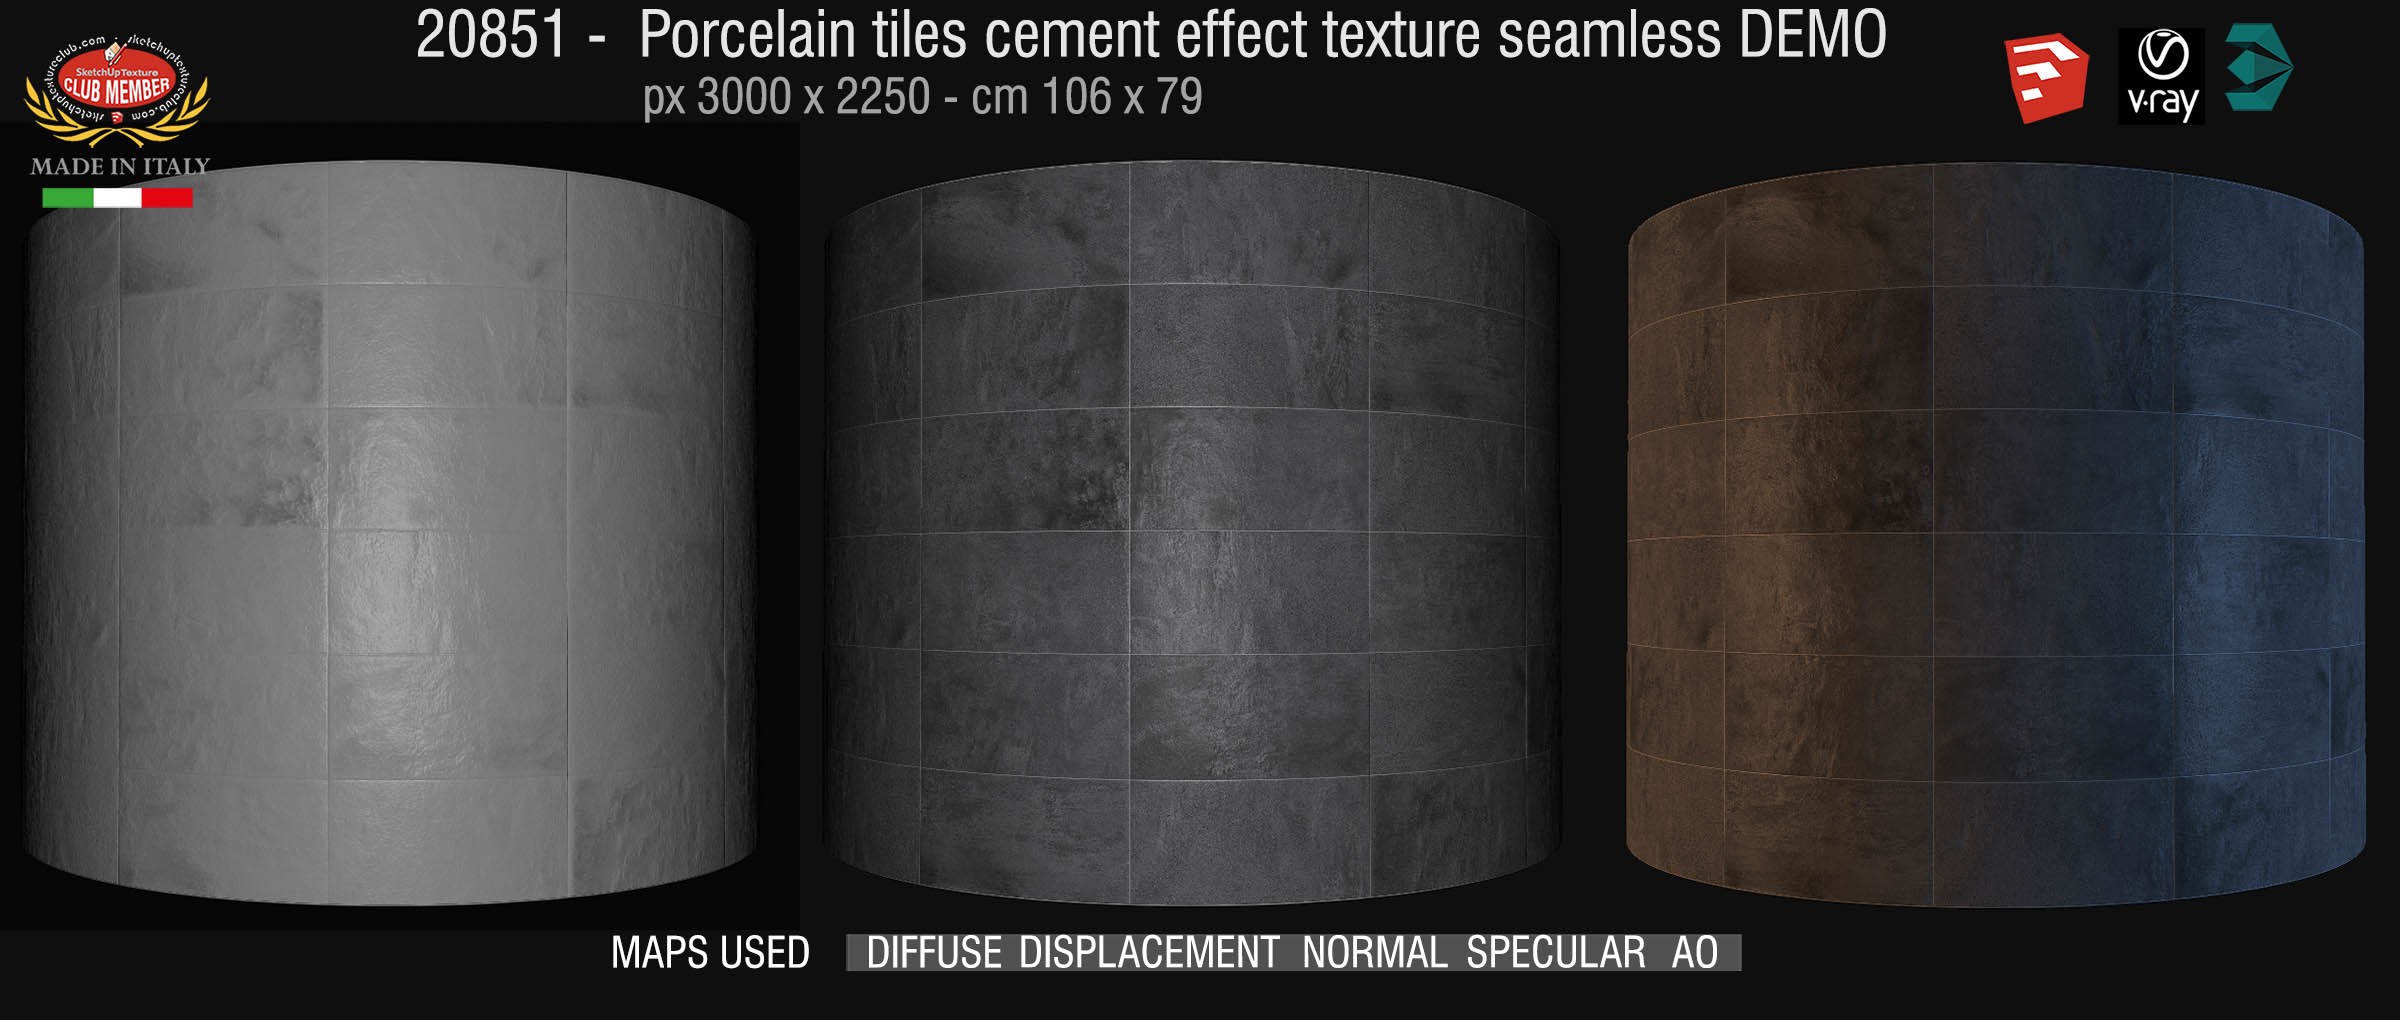 20851 HR Porcelain tiles cement effect texture seamless + maps DEMO